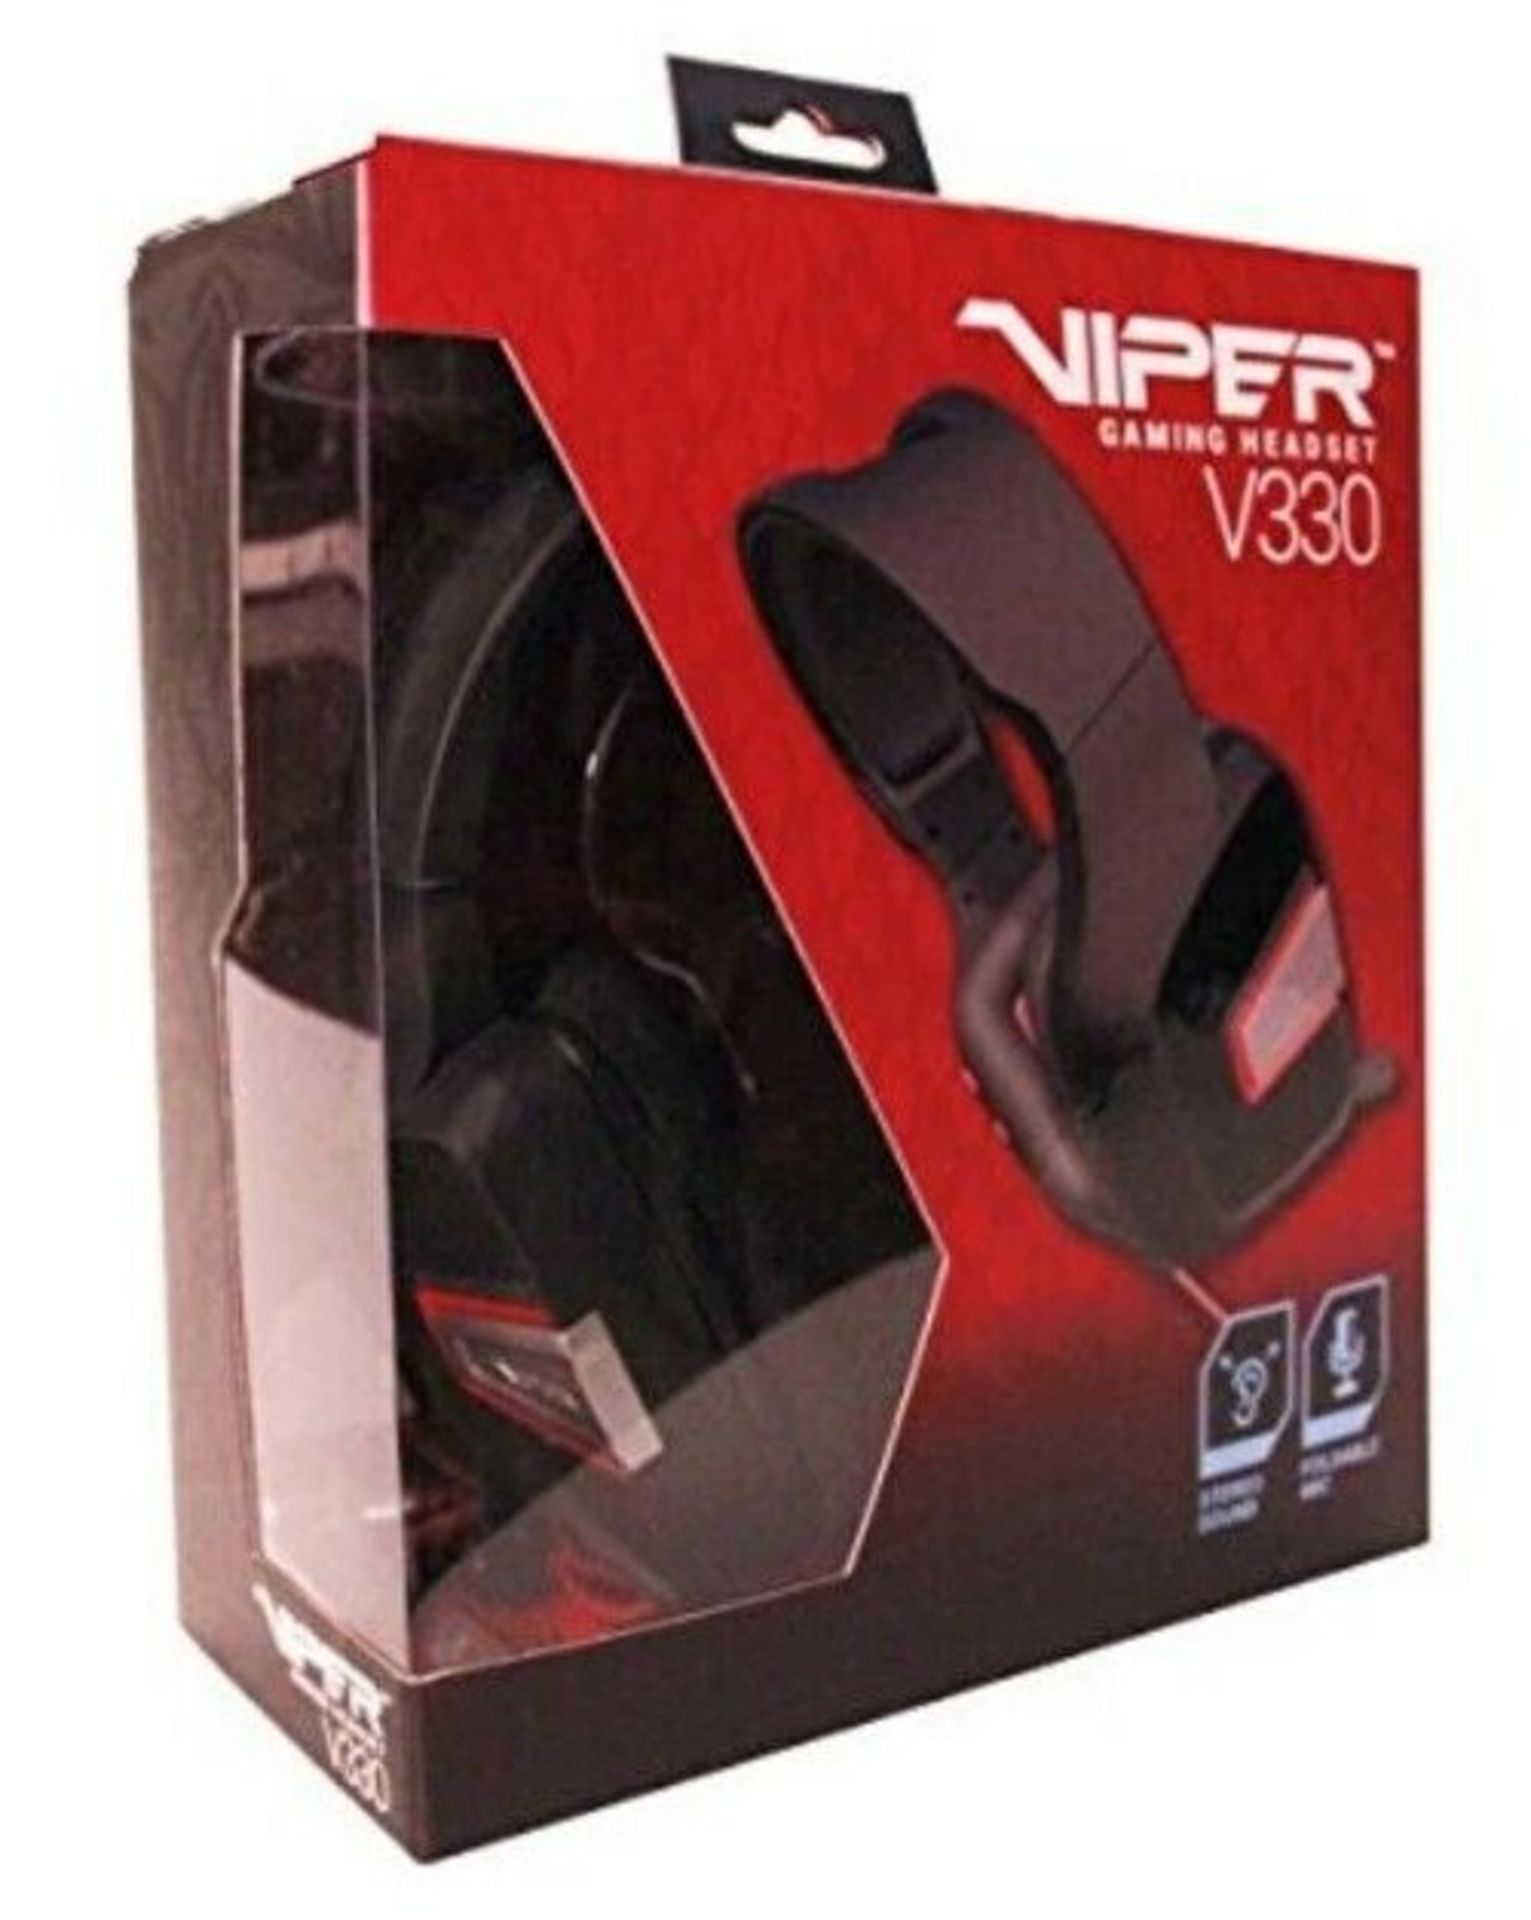 6 X VIPER GAMING HEADSETS V330 R3.2